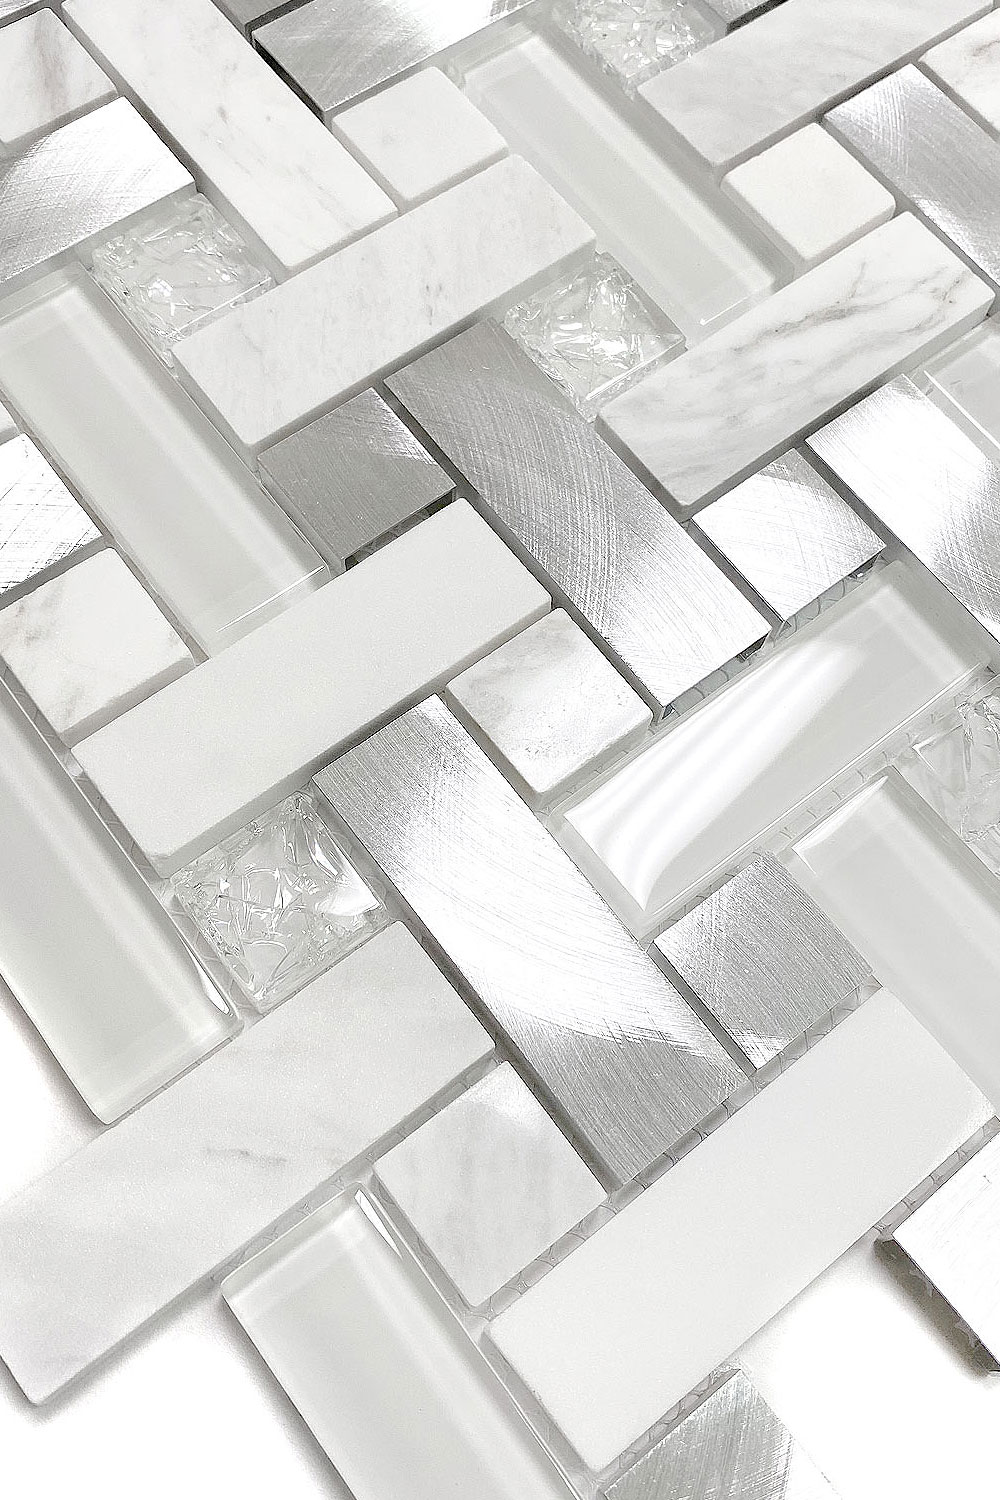 Modern design kitchen backsplash tile, white and gray glass metal and marble mixed. #whitebacksplash #glassbacksplash #metalbacksplash #modernbacksplash #marblebacksplash